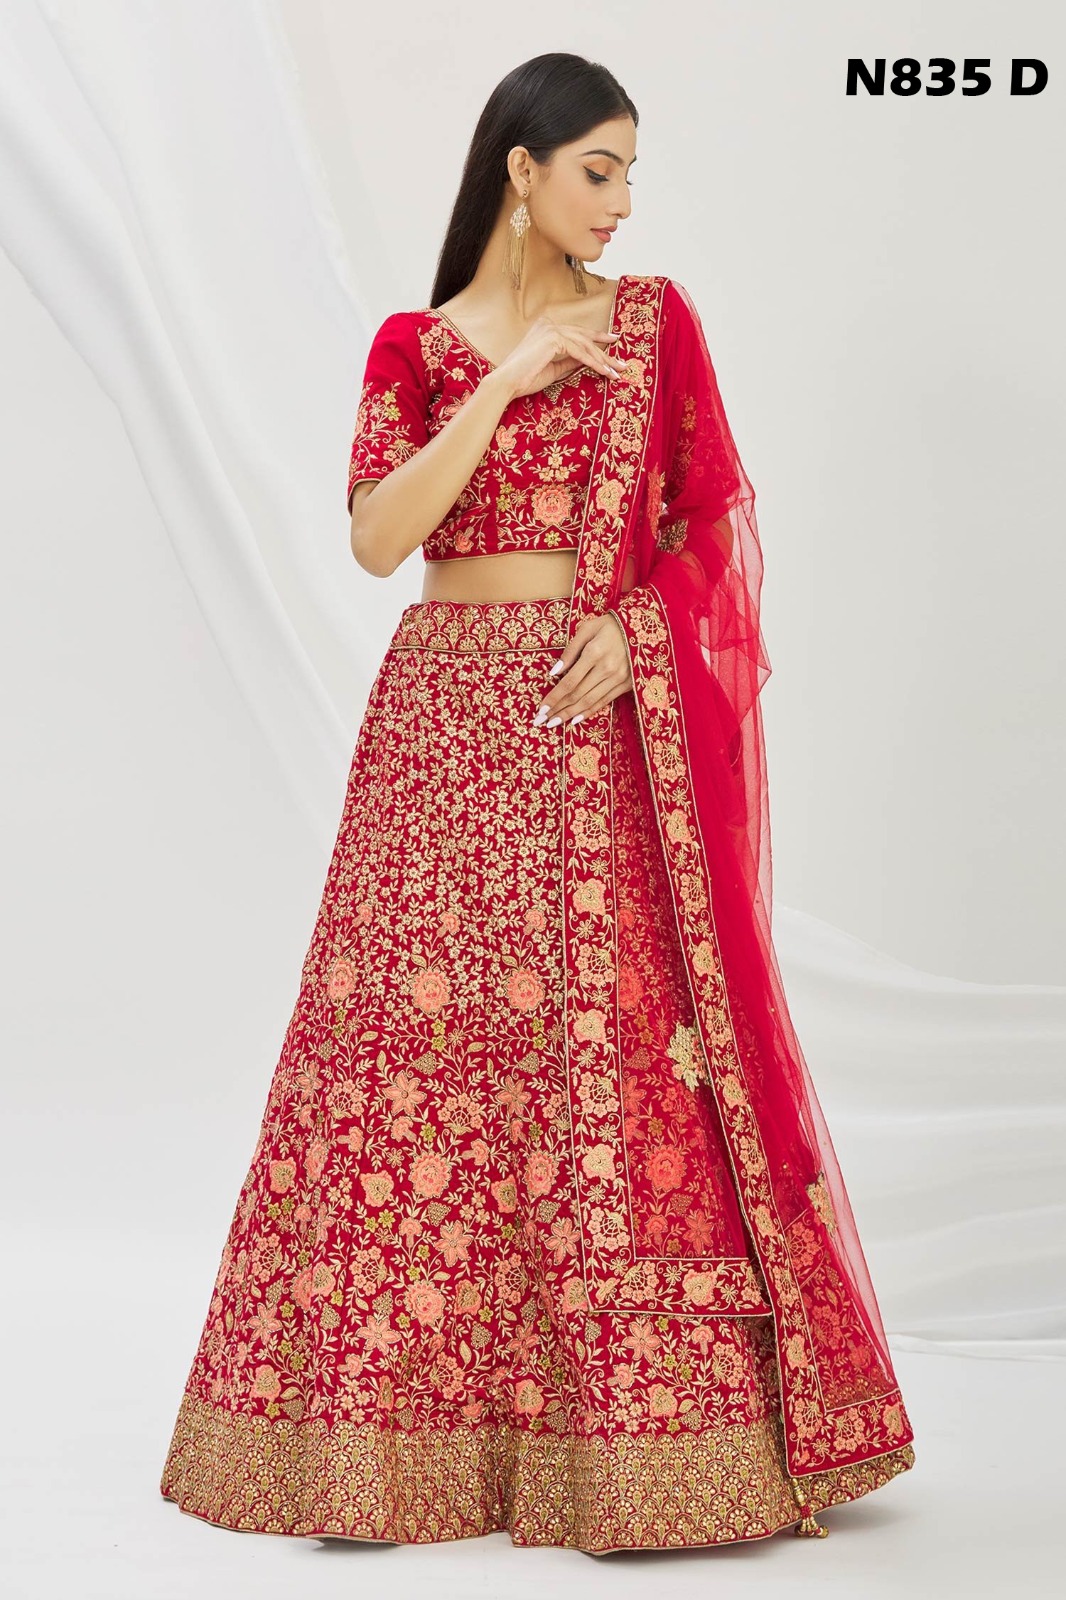 mahotsav nimaya n800 series velvet festive look lehenga catalog